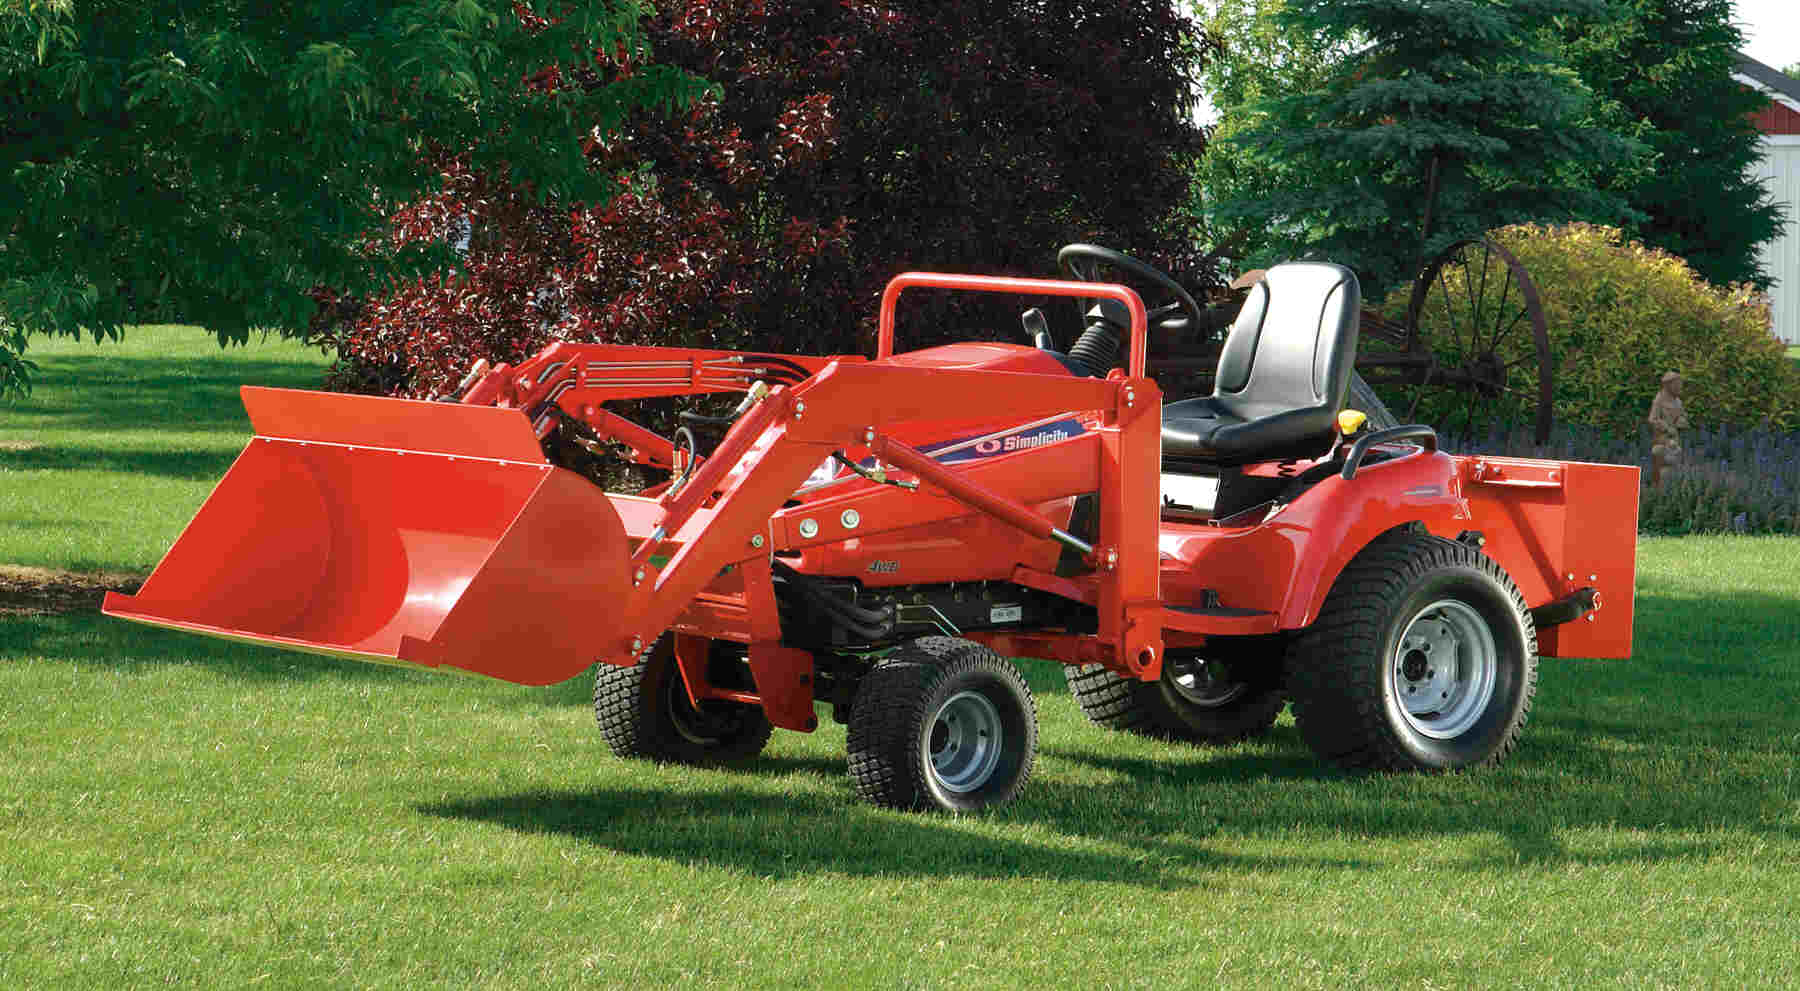 The Simplicity Legacy: A True Garden Workhorse Tractor